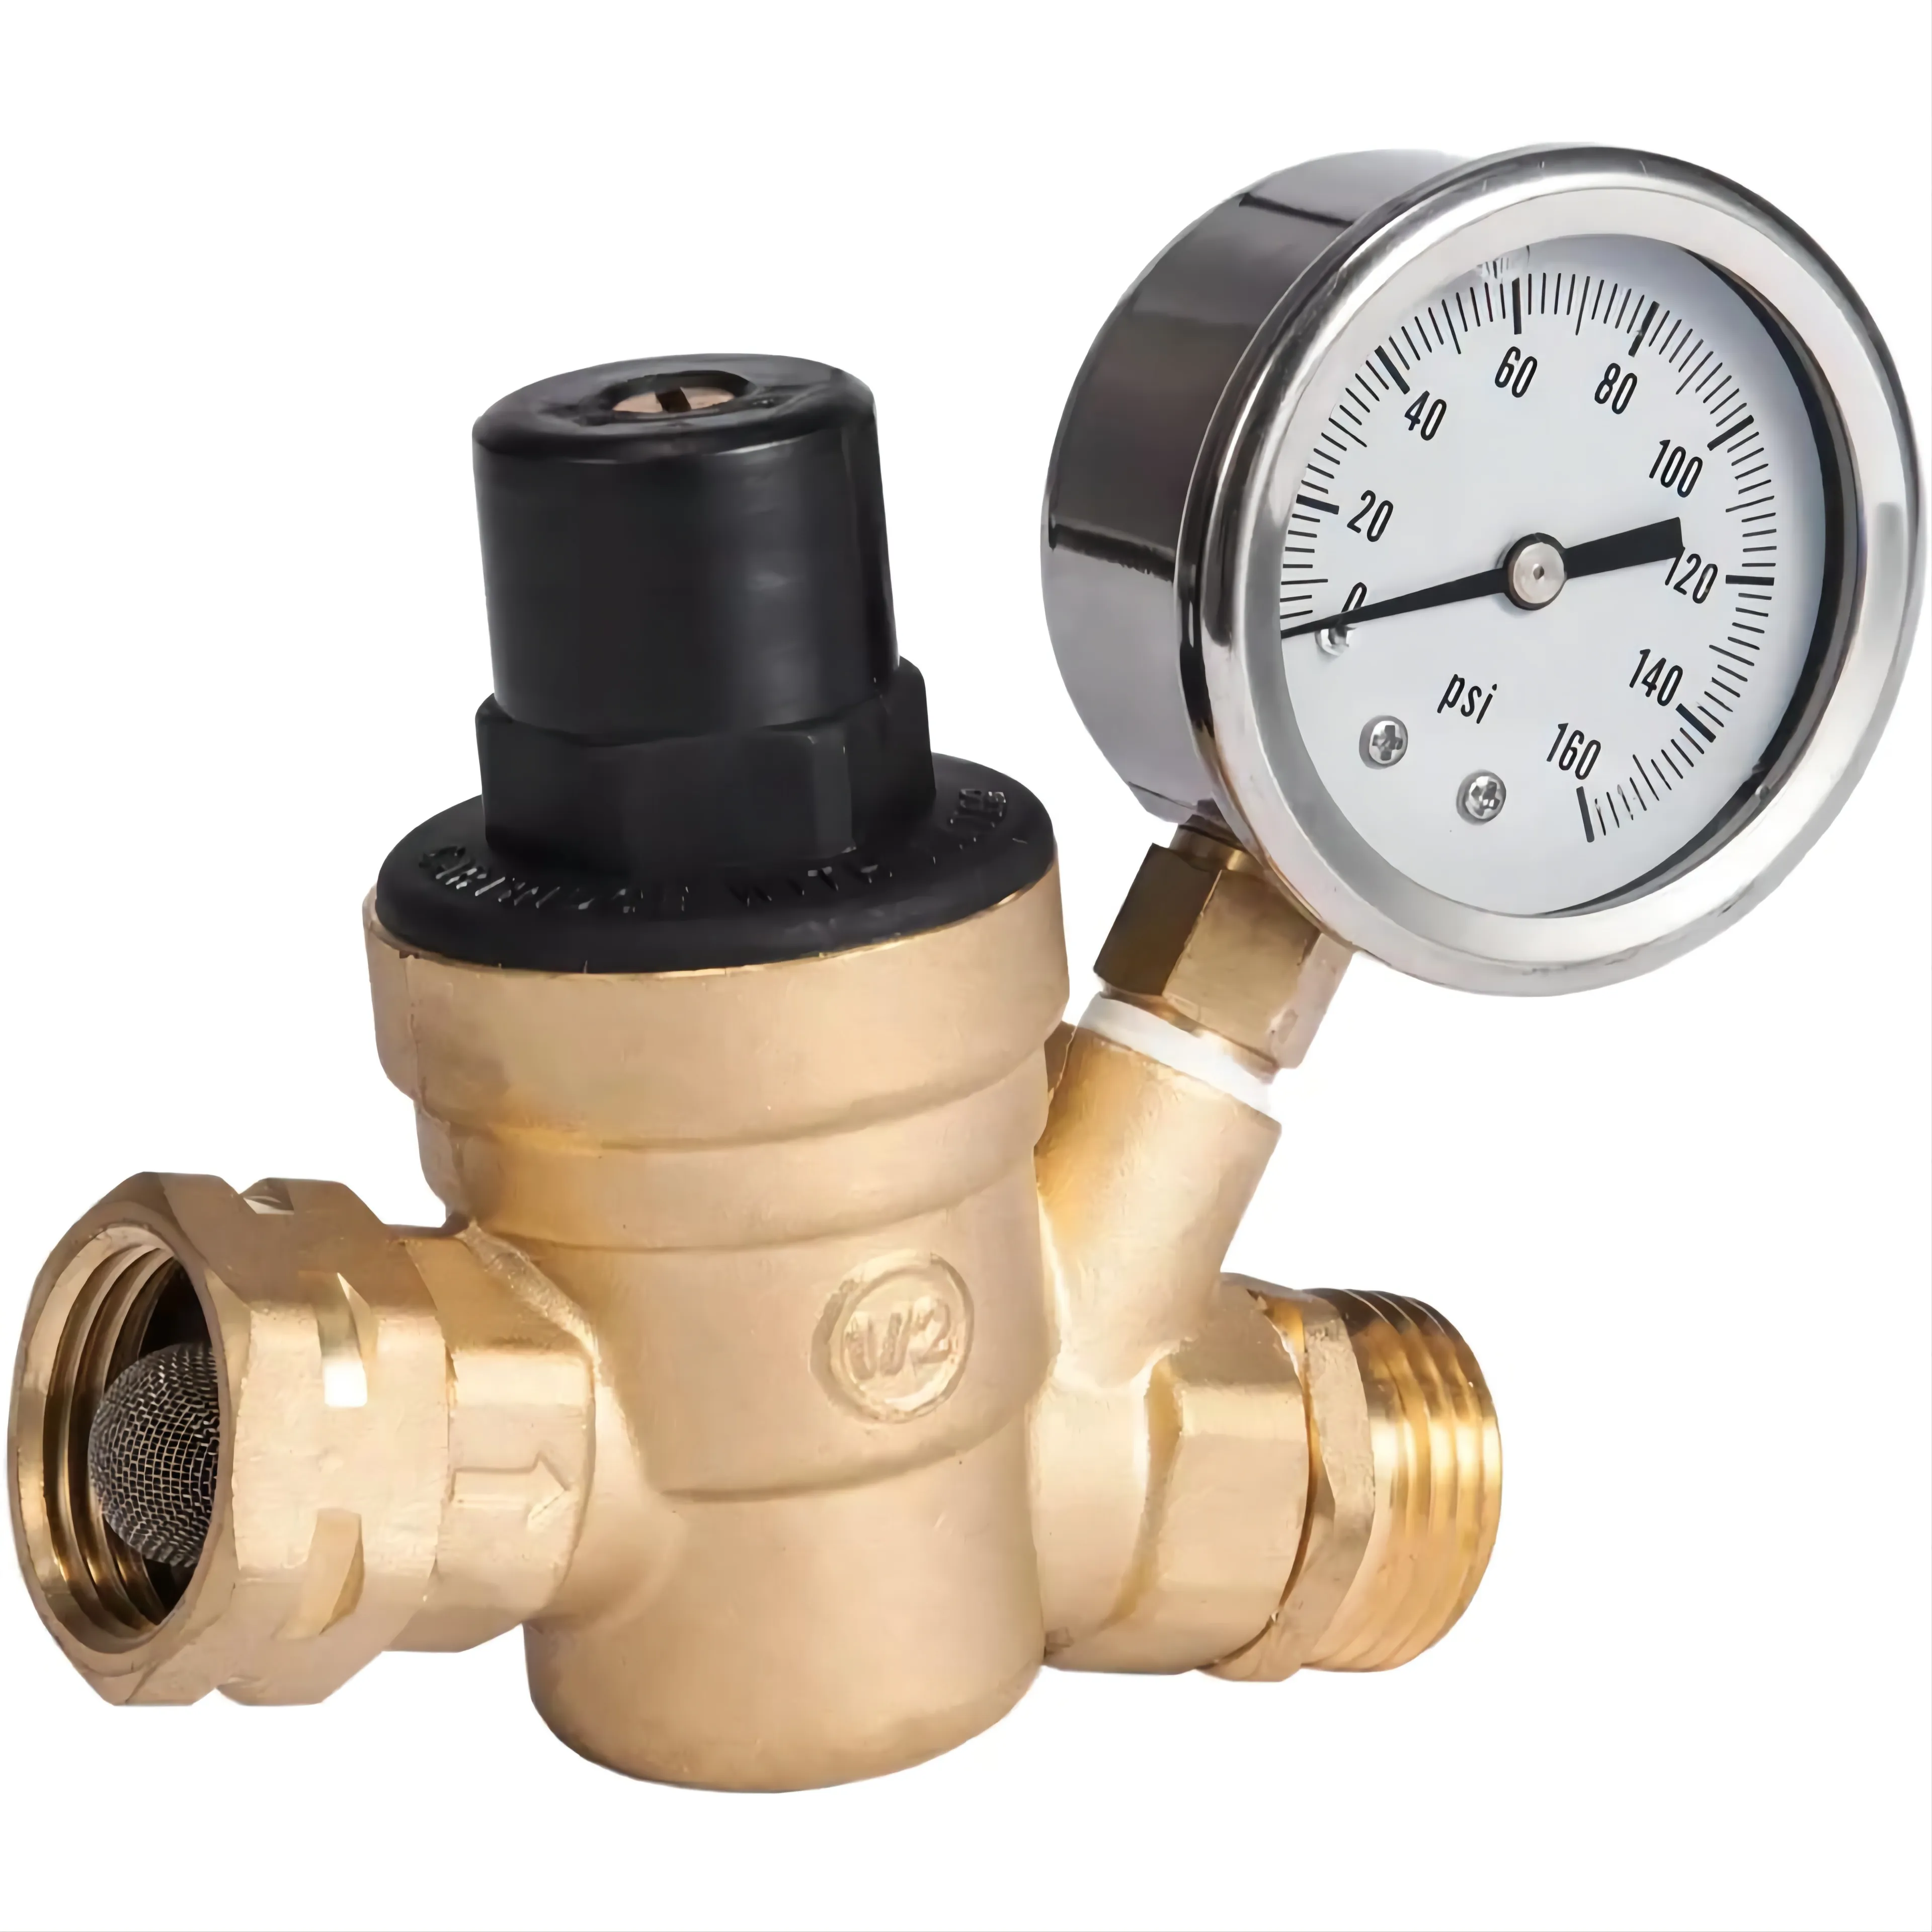 Pressure Regulator Lead-Free Adjustable with Gauge Meter for RV Camper DN15 Brass Water Pressure Regulator Reducer Valve 